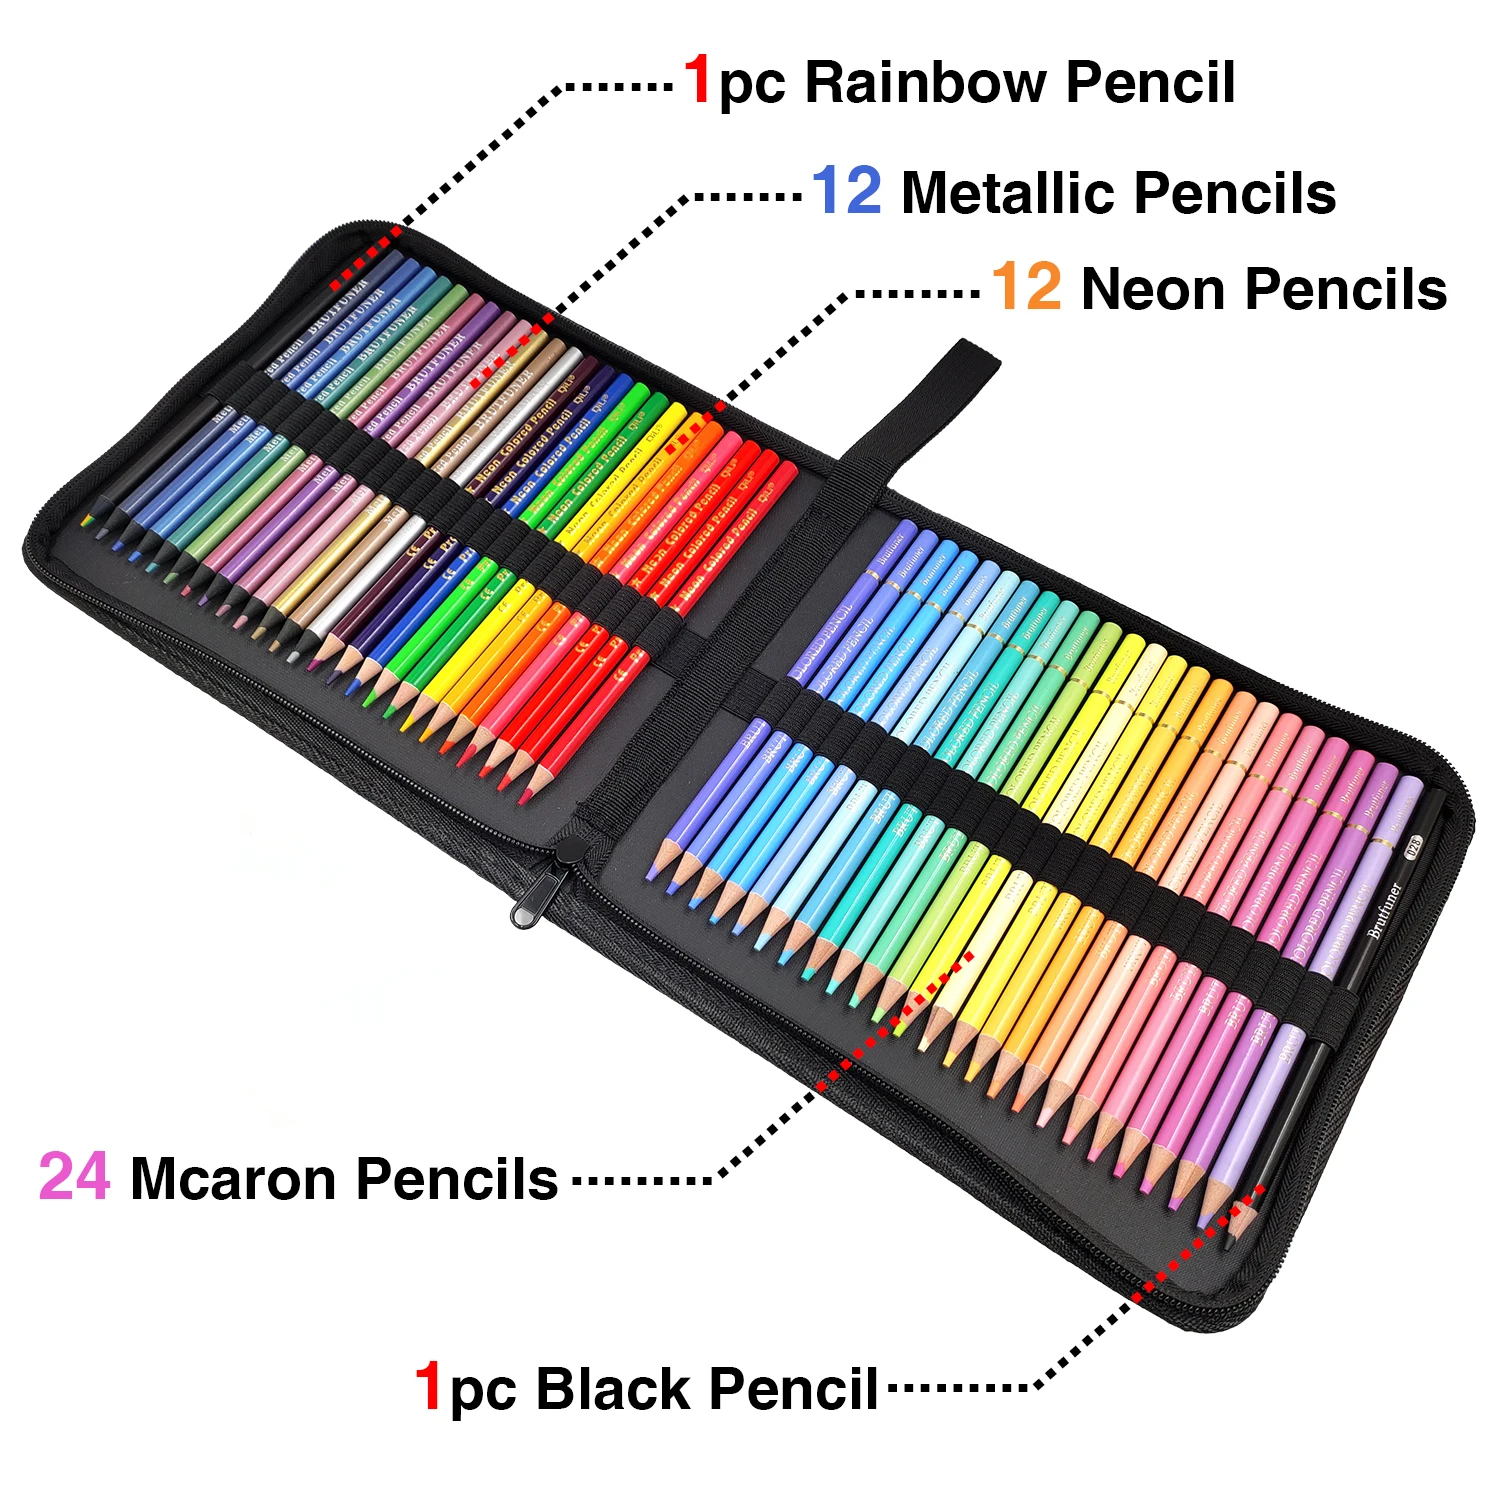 https://ae01.alicdn.com/kf/S7a60582d6a5b4daba45c4e51486b74c3H/New-Brutfuner-72-Macaron-50-Metallic-Colors-Professional-Artist-Colored-Pencils-Soft-Core-Case-Bag-For.jpg